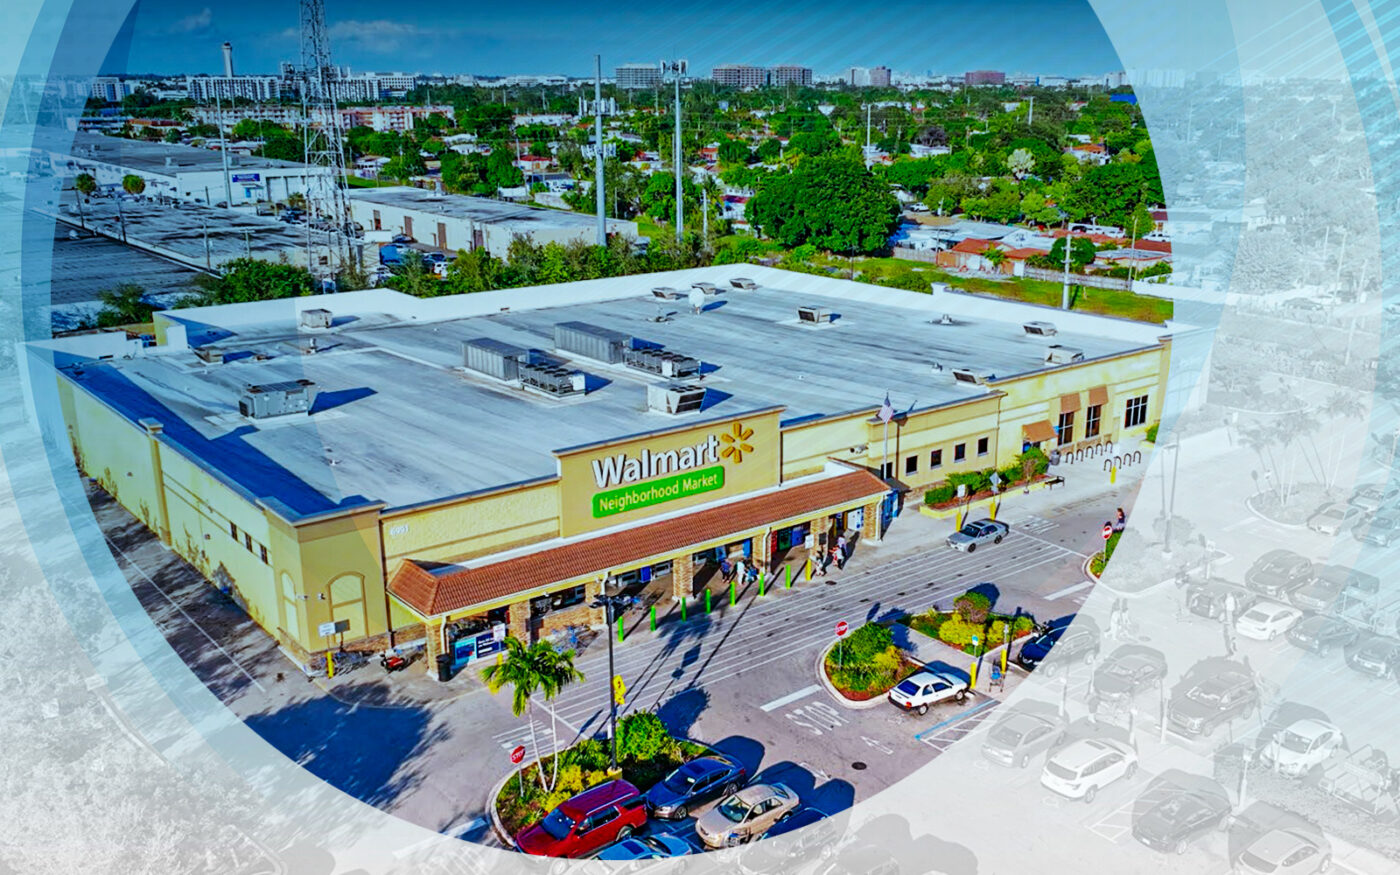 File:Walmart Neighborhood Market in Miami.jpg - Wikipedia